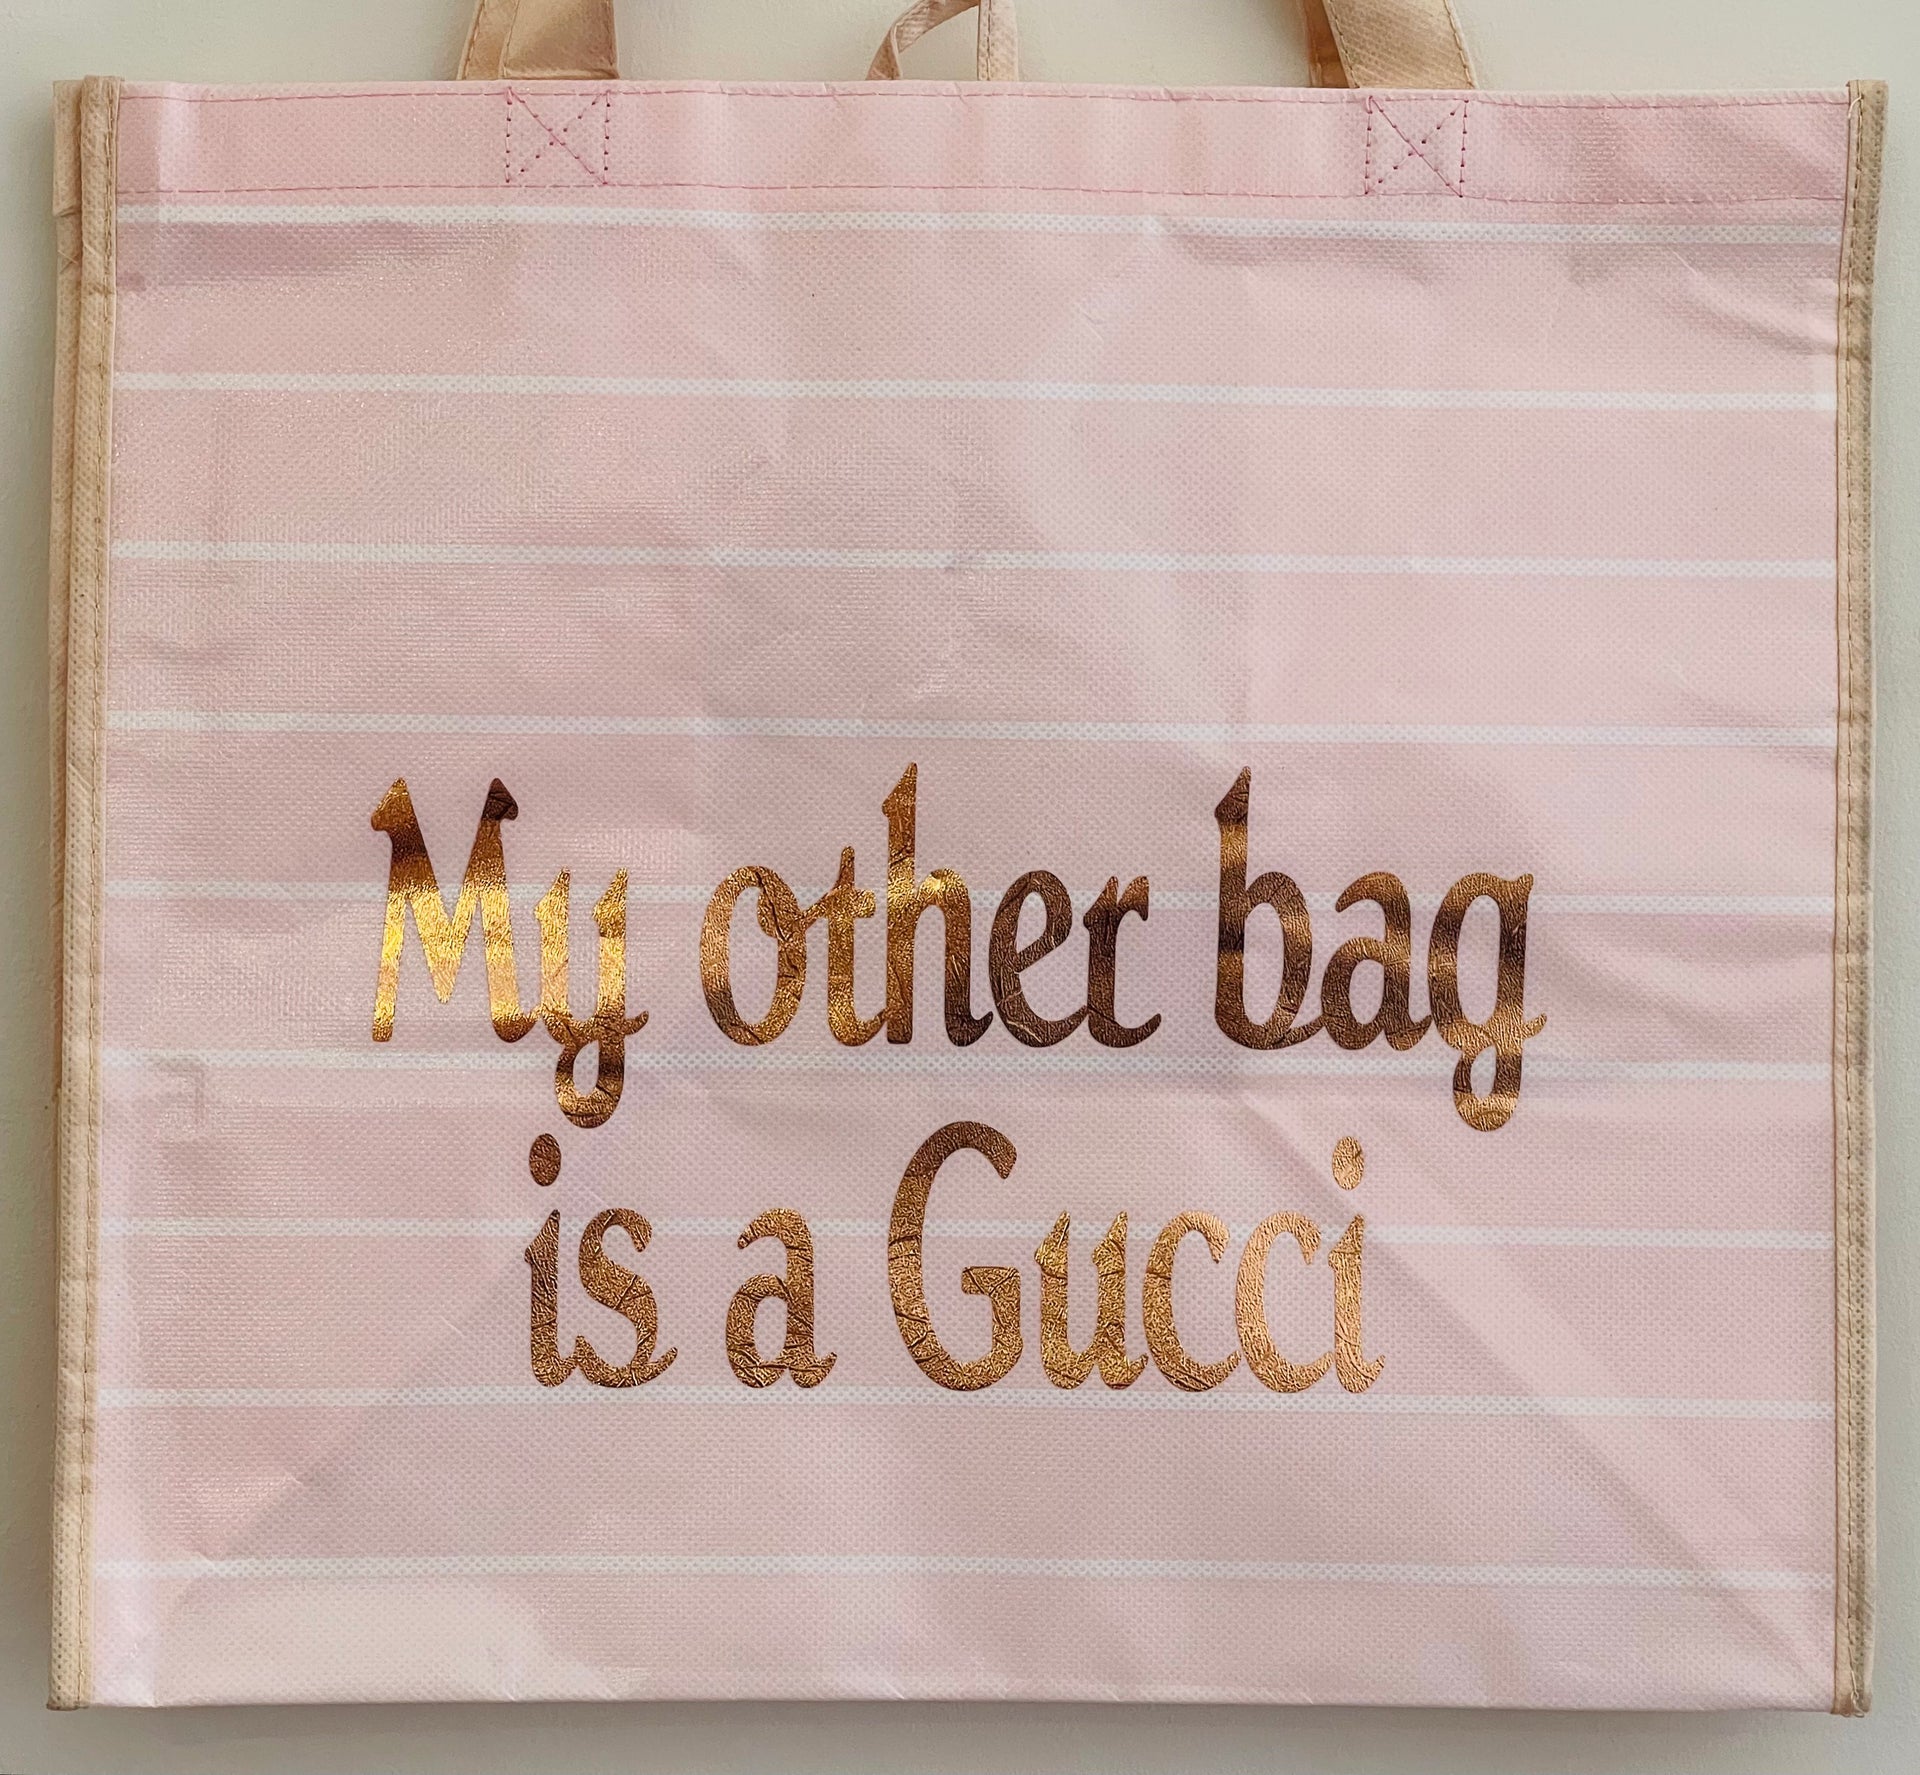 gucci shopping bag